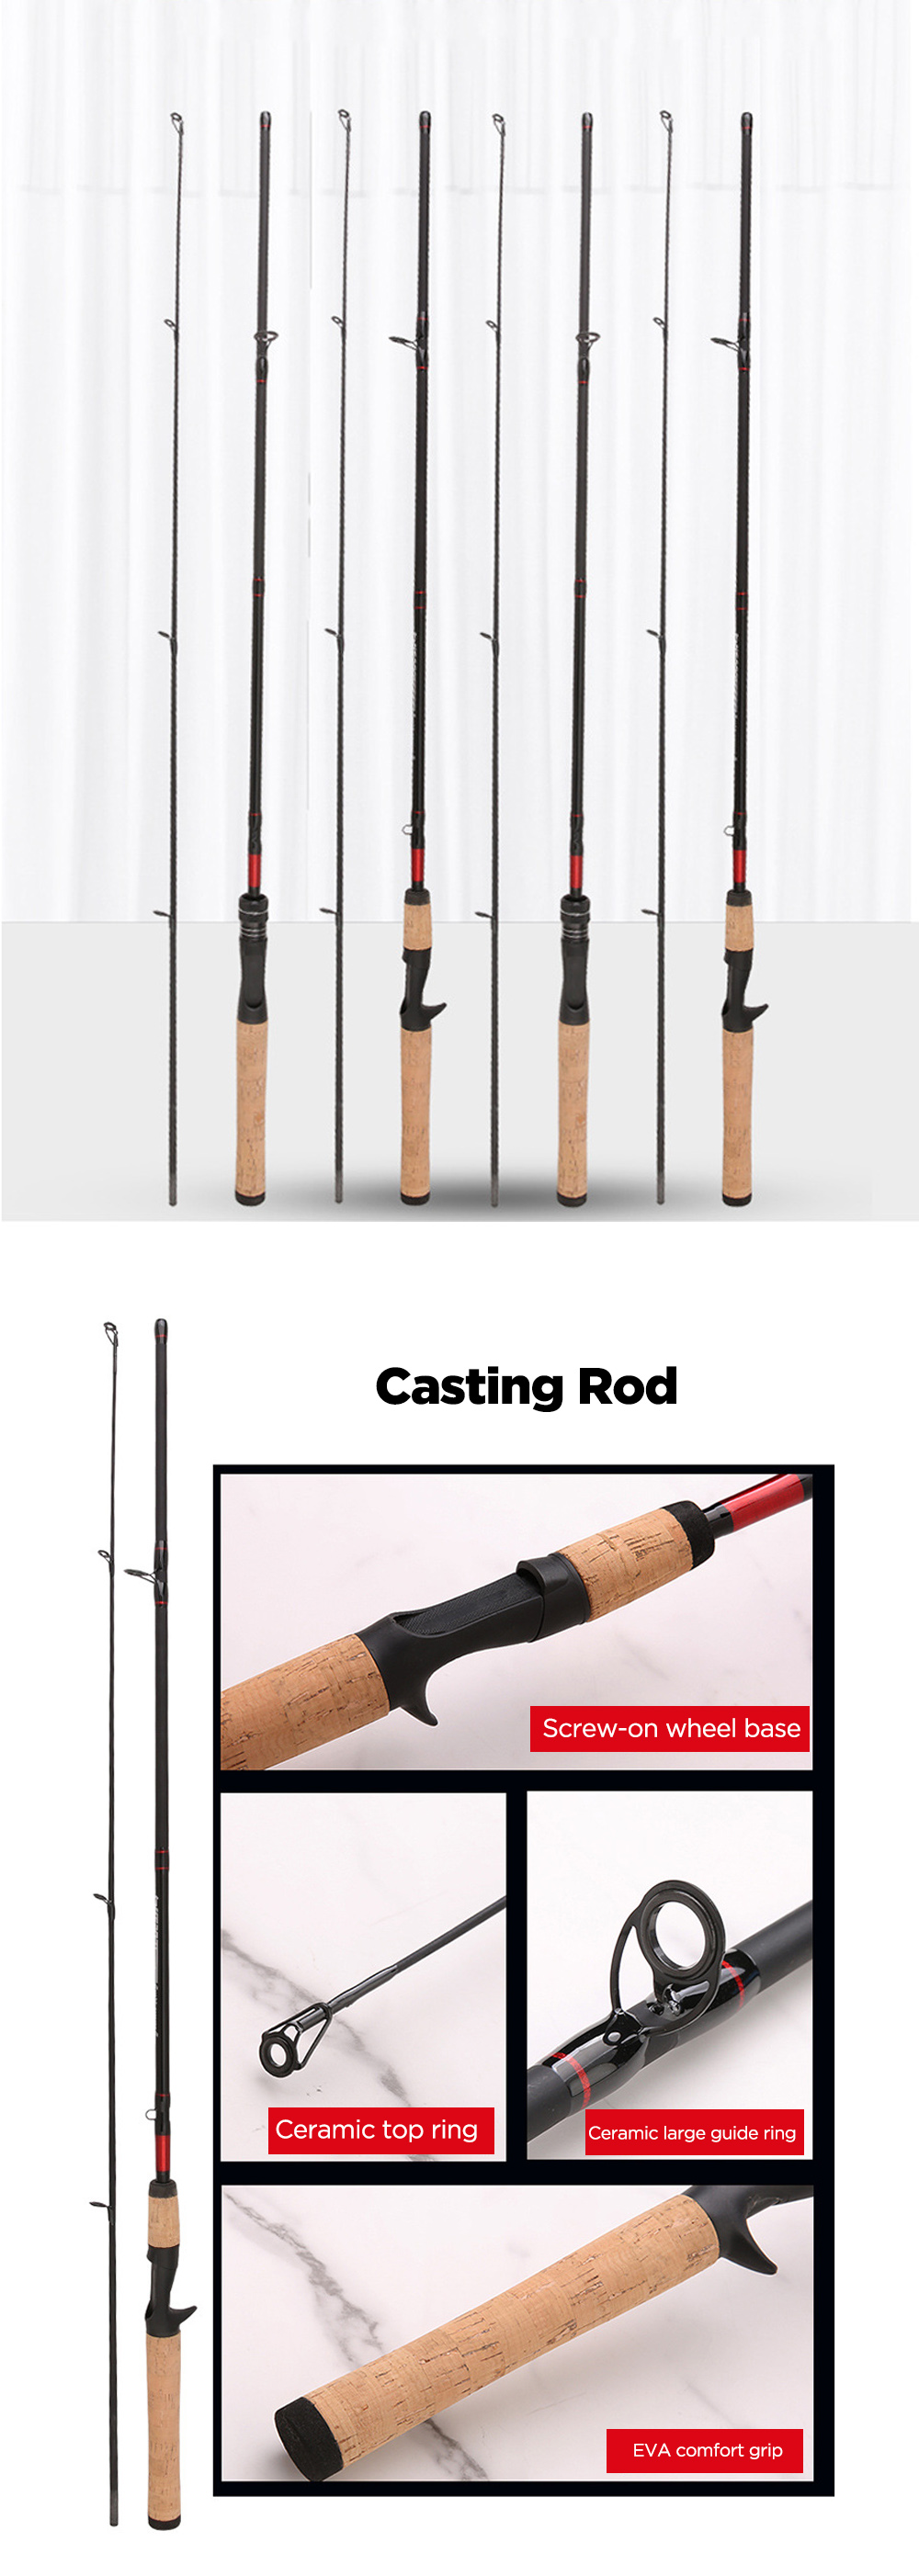 ZANLURE-18M-ML-Tonality-CastingSpinning-Fishing-Rod-2500g-Max-Fishing-Power-Spinning-Carbon-Bass-Lur-1844008-1